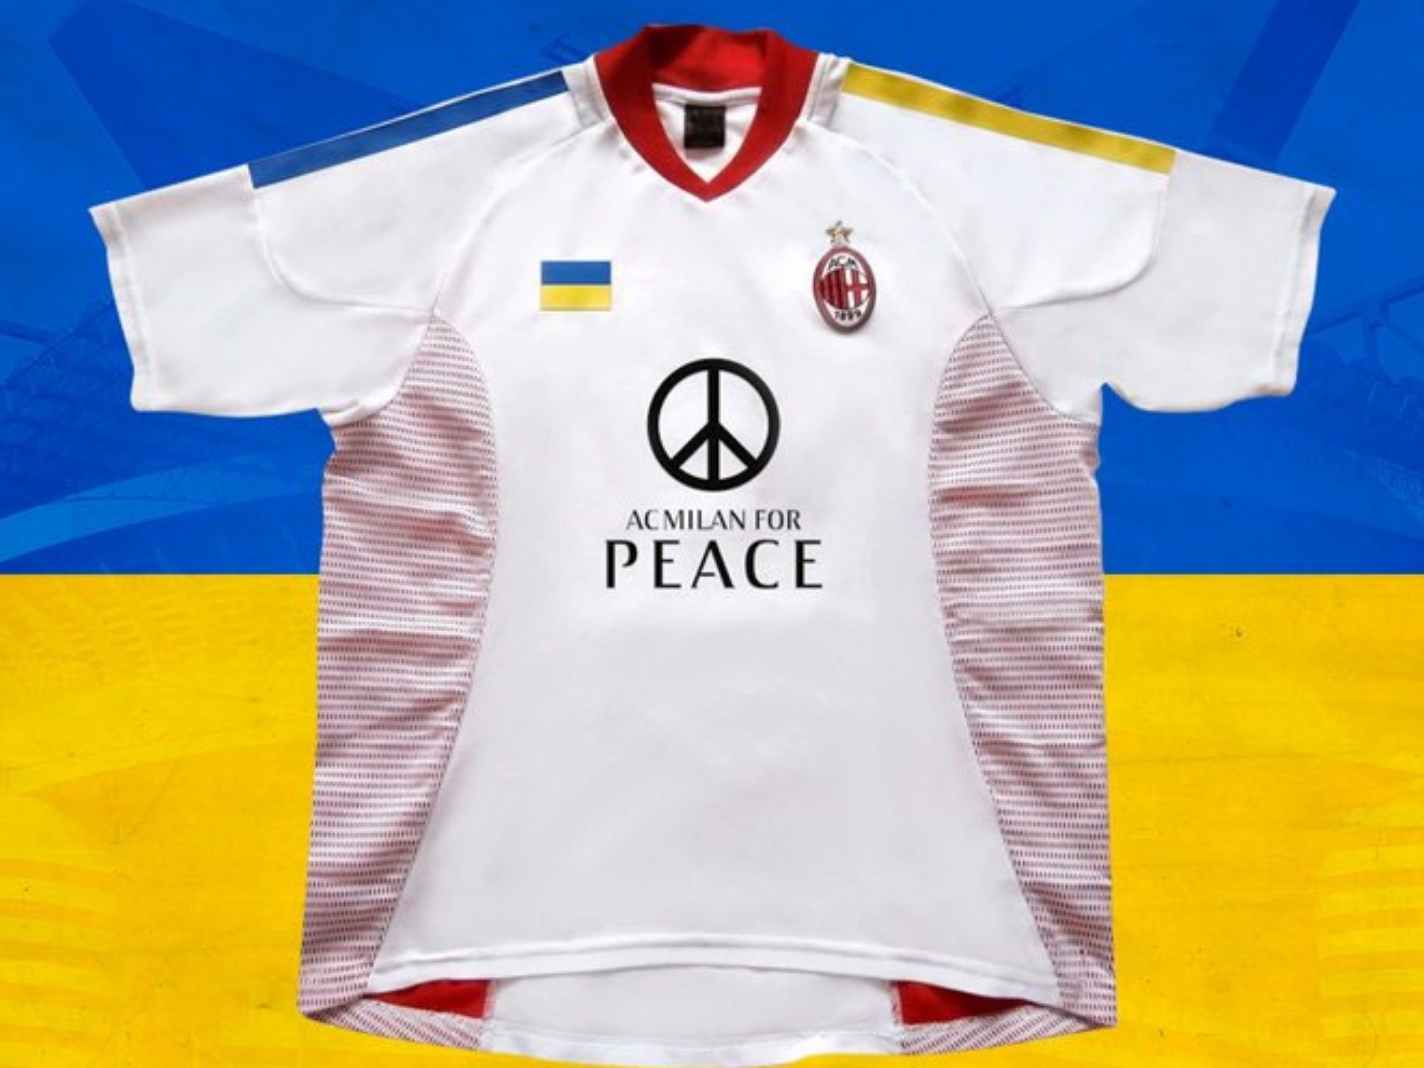 AC Milan release  Shevchenko jersey to raise funds for Ukraine